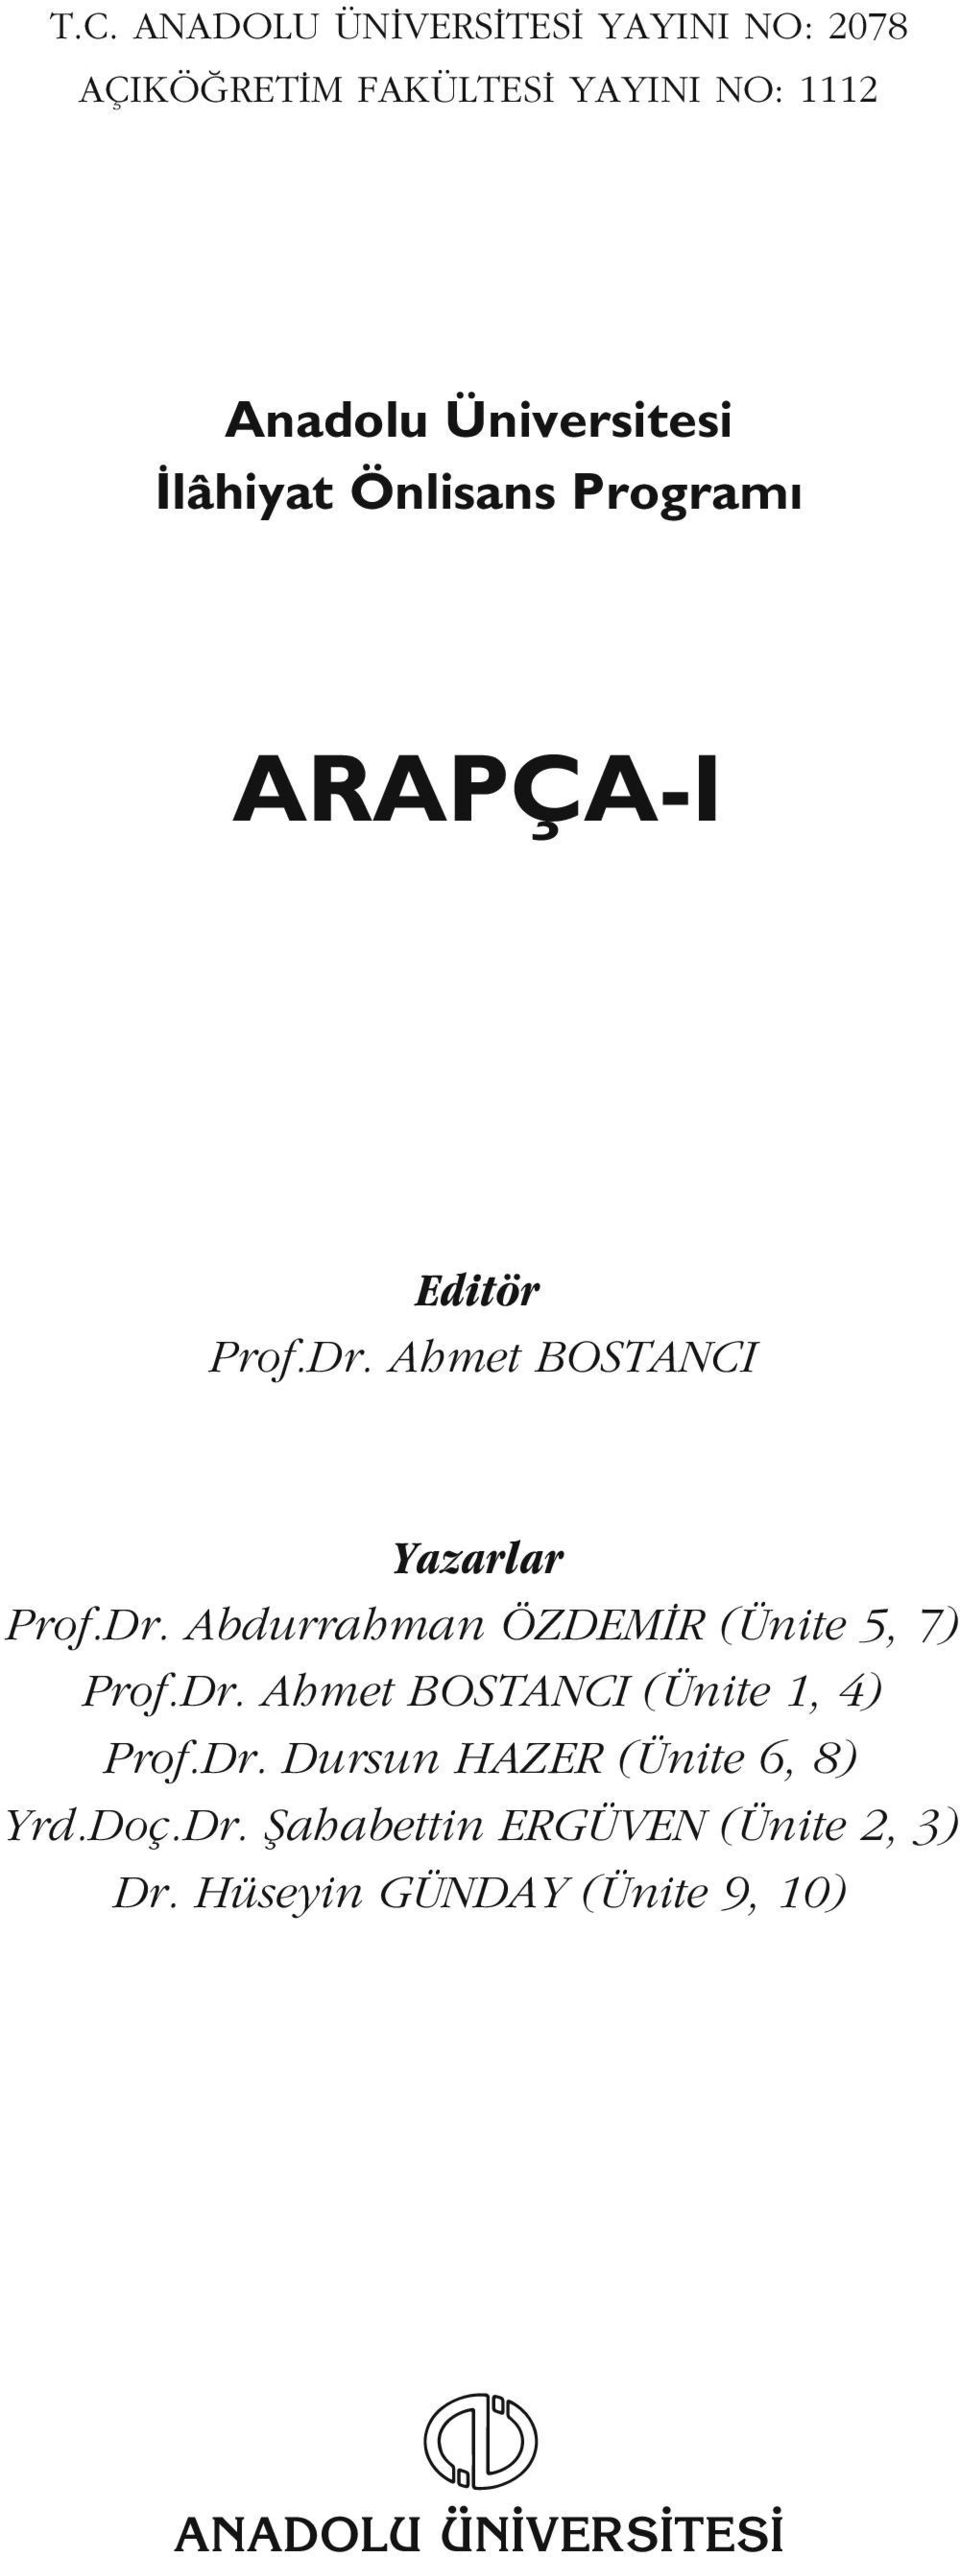 Ahmet BOSTANCI Yazarlar Prof.Dr. Abdurrahman ÖZDEM R (Ünite 5, 7) Prof.Dr. Ahmet BOSTANCI (Ünite 1, 4) Prof.